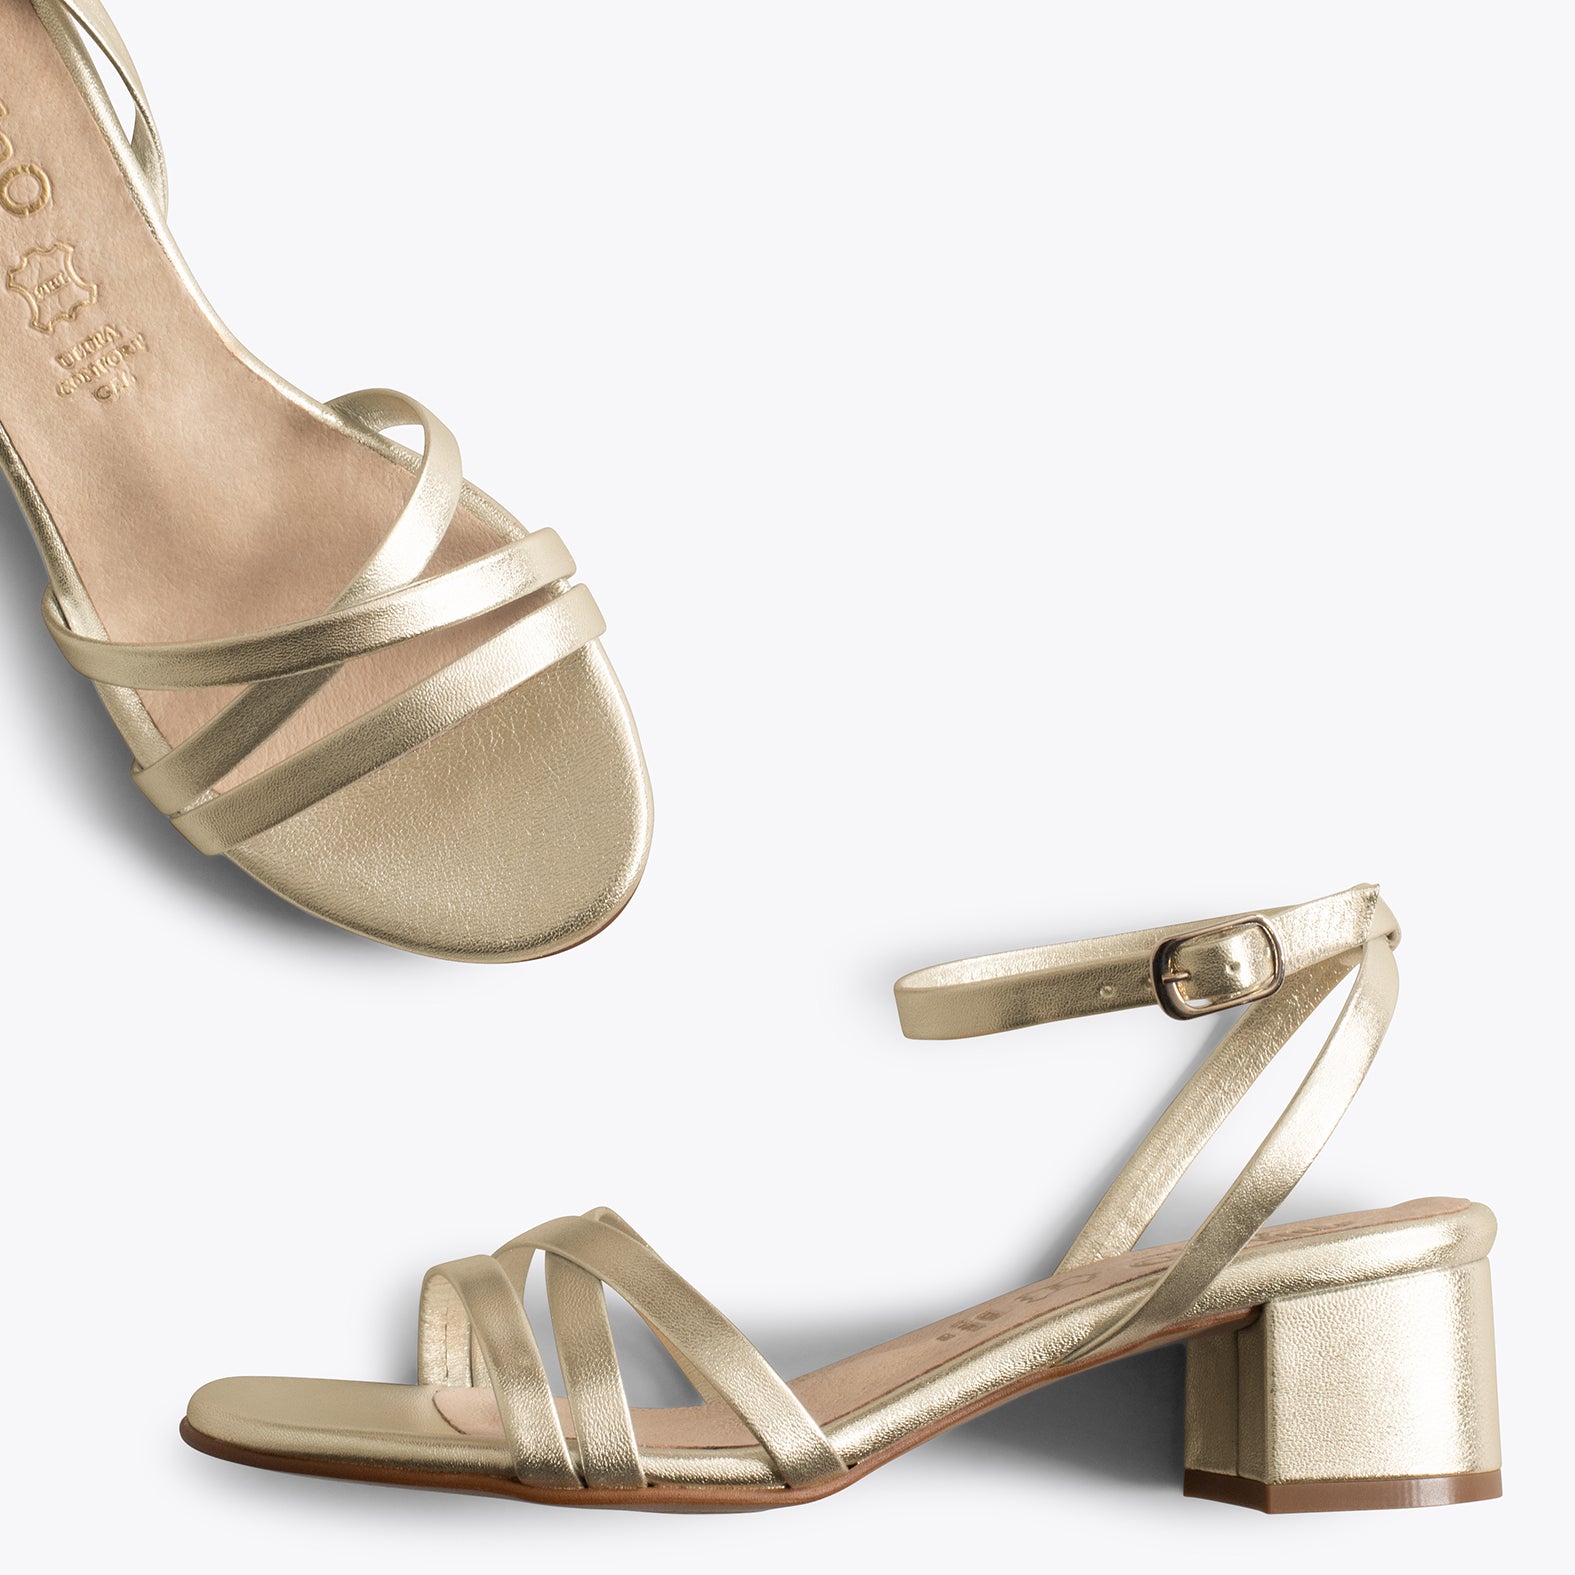 VIENA – GOLD sandals with straps